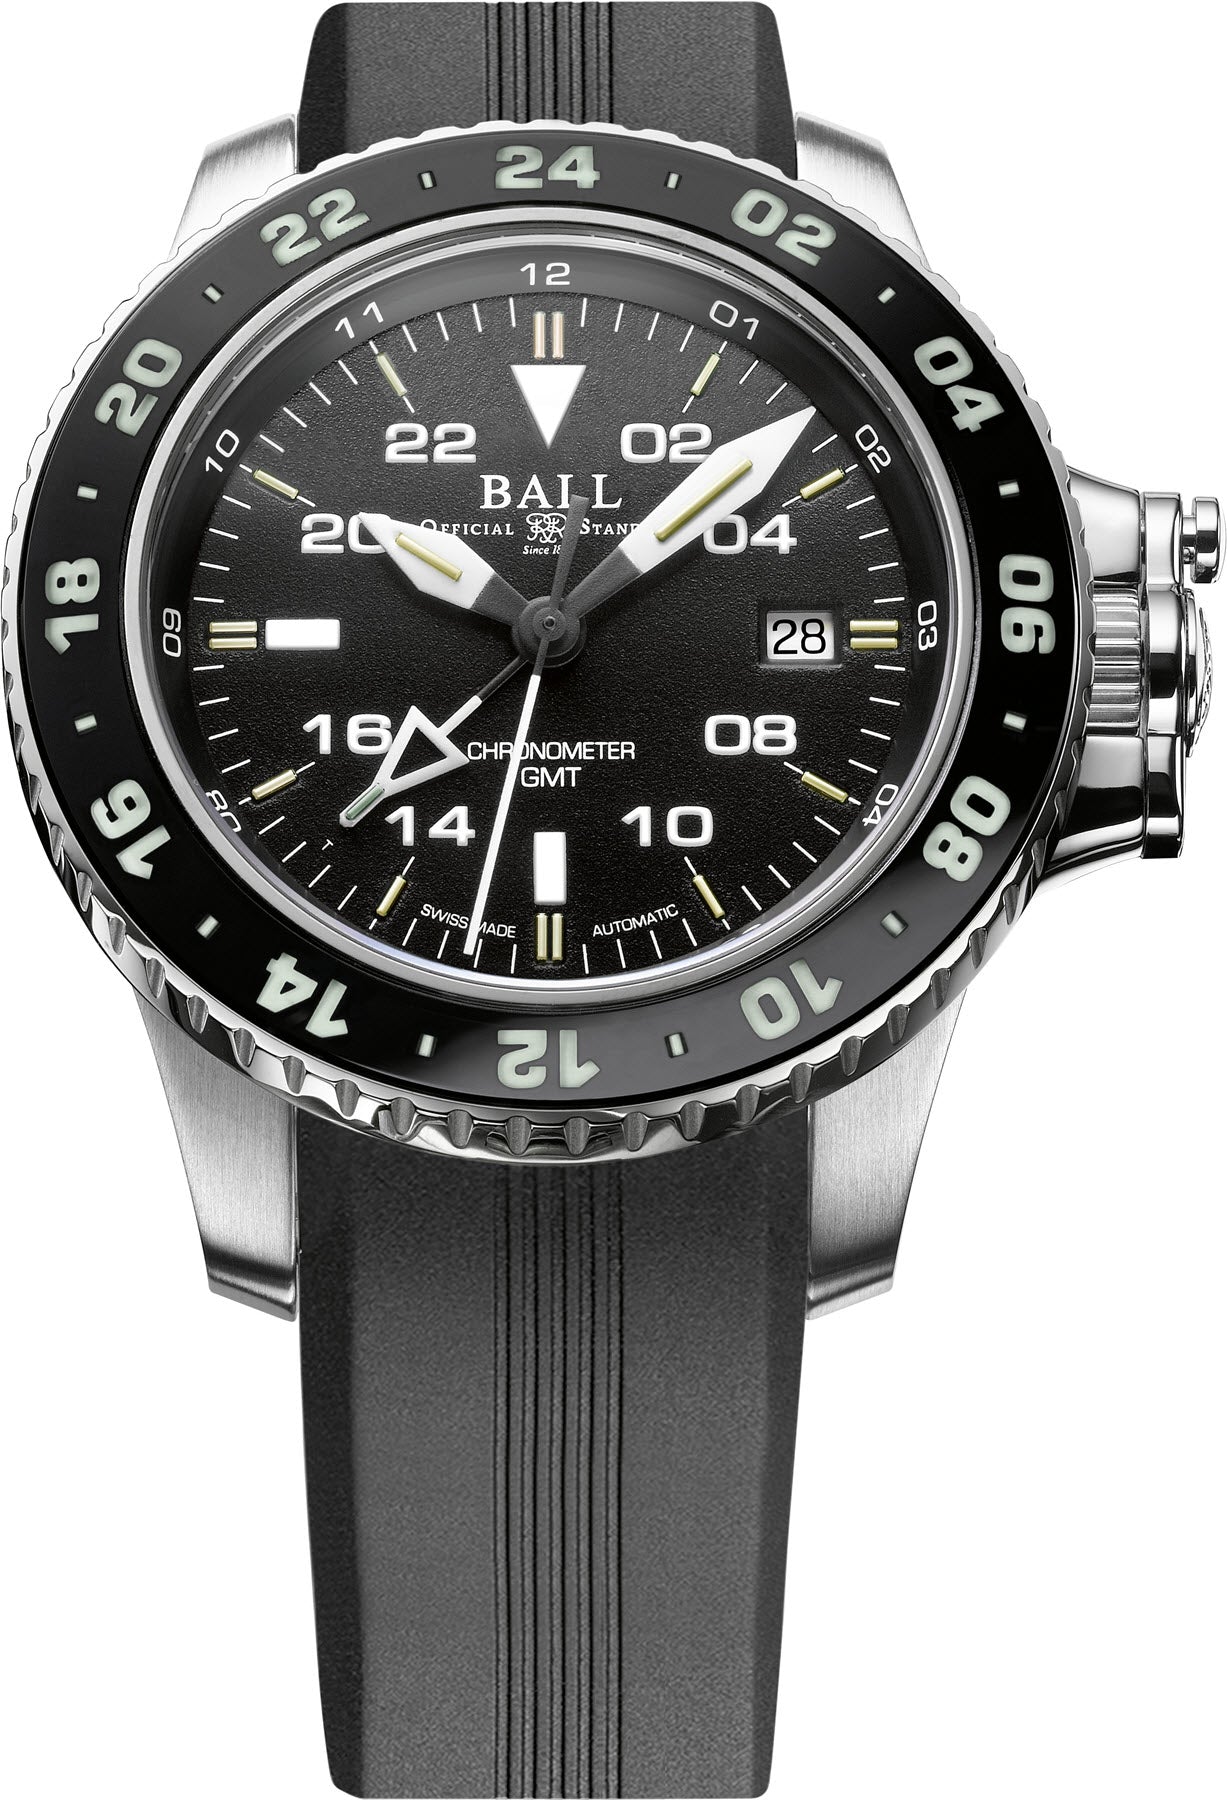 Photos - Wrist Watch Ball Watch Company Engineer Hydrocarbon AeroGMT II BL-1645 